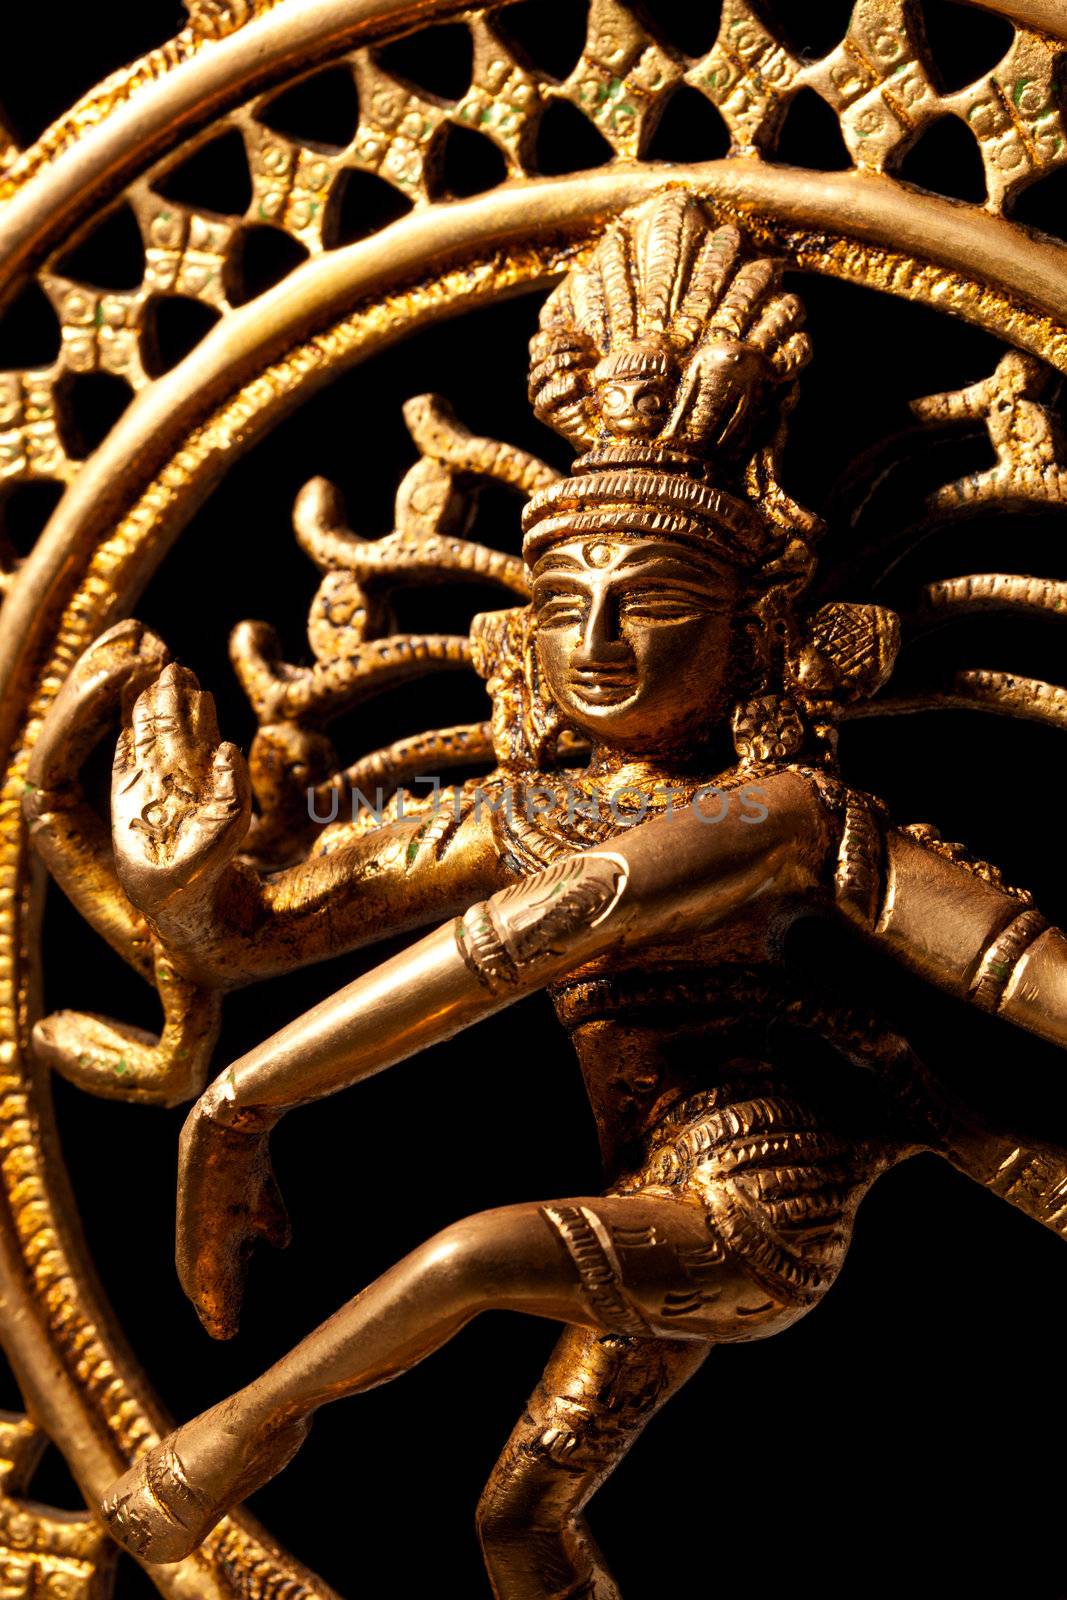 Statue of indian hindu god Shiva Nataraja - Lord of Dance close up